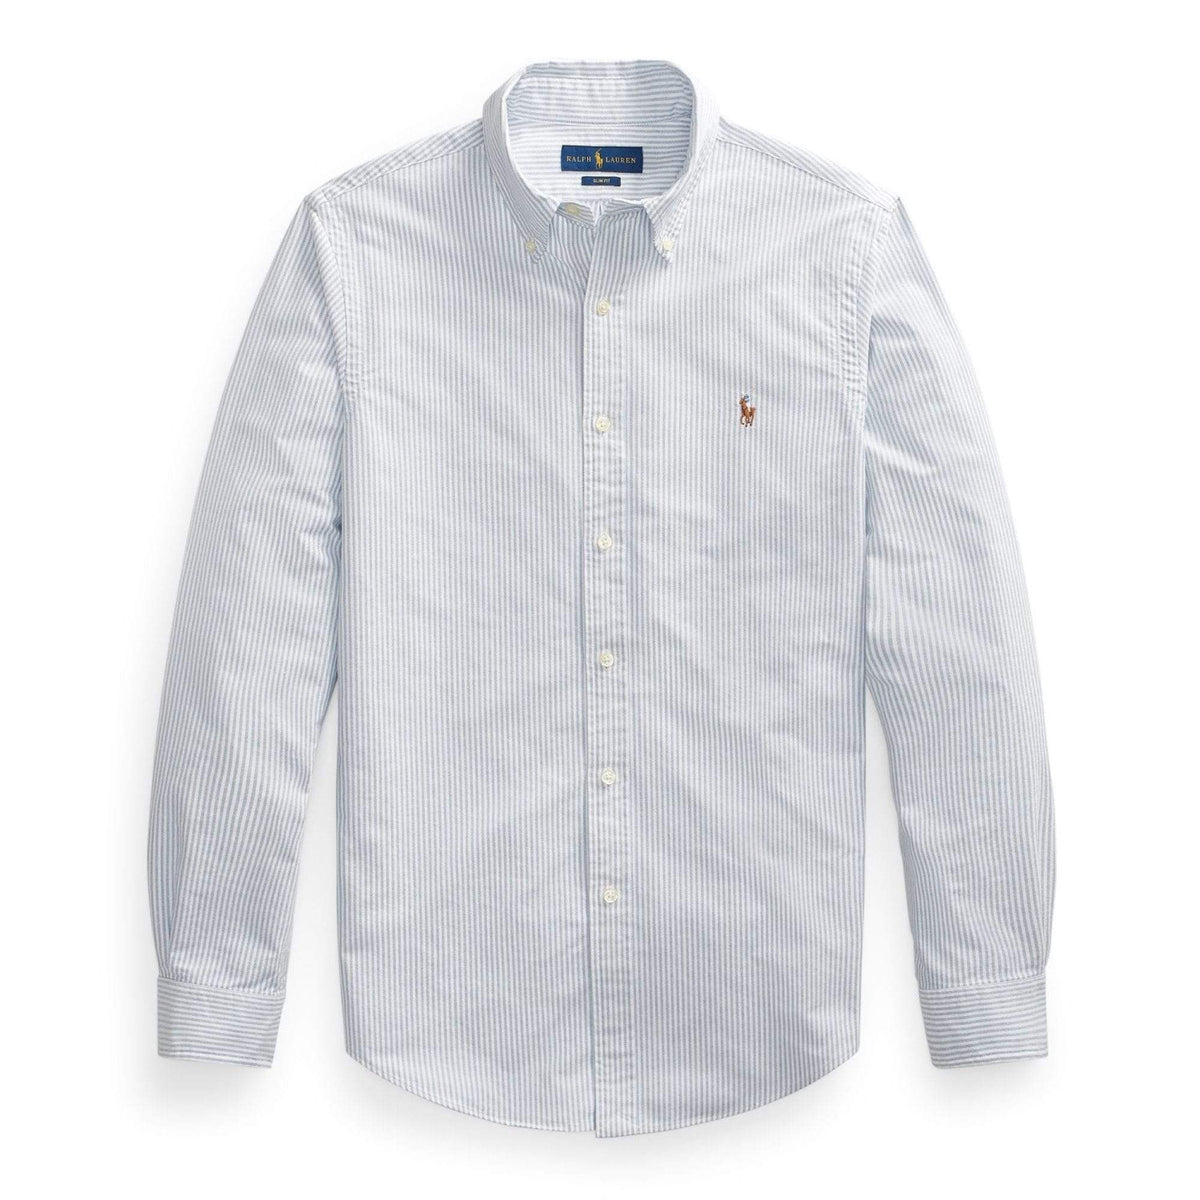 Polo Ralph Lauren Shirts Polo Ralph Lauren White Oxford Shirt